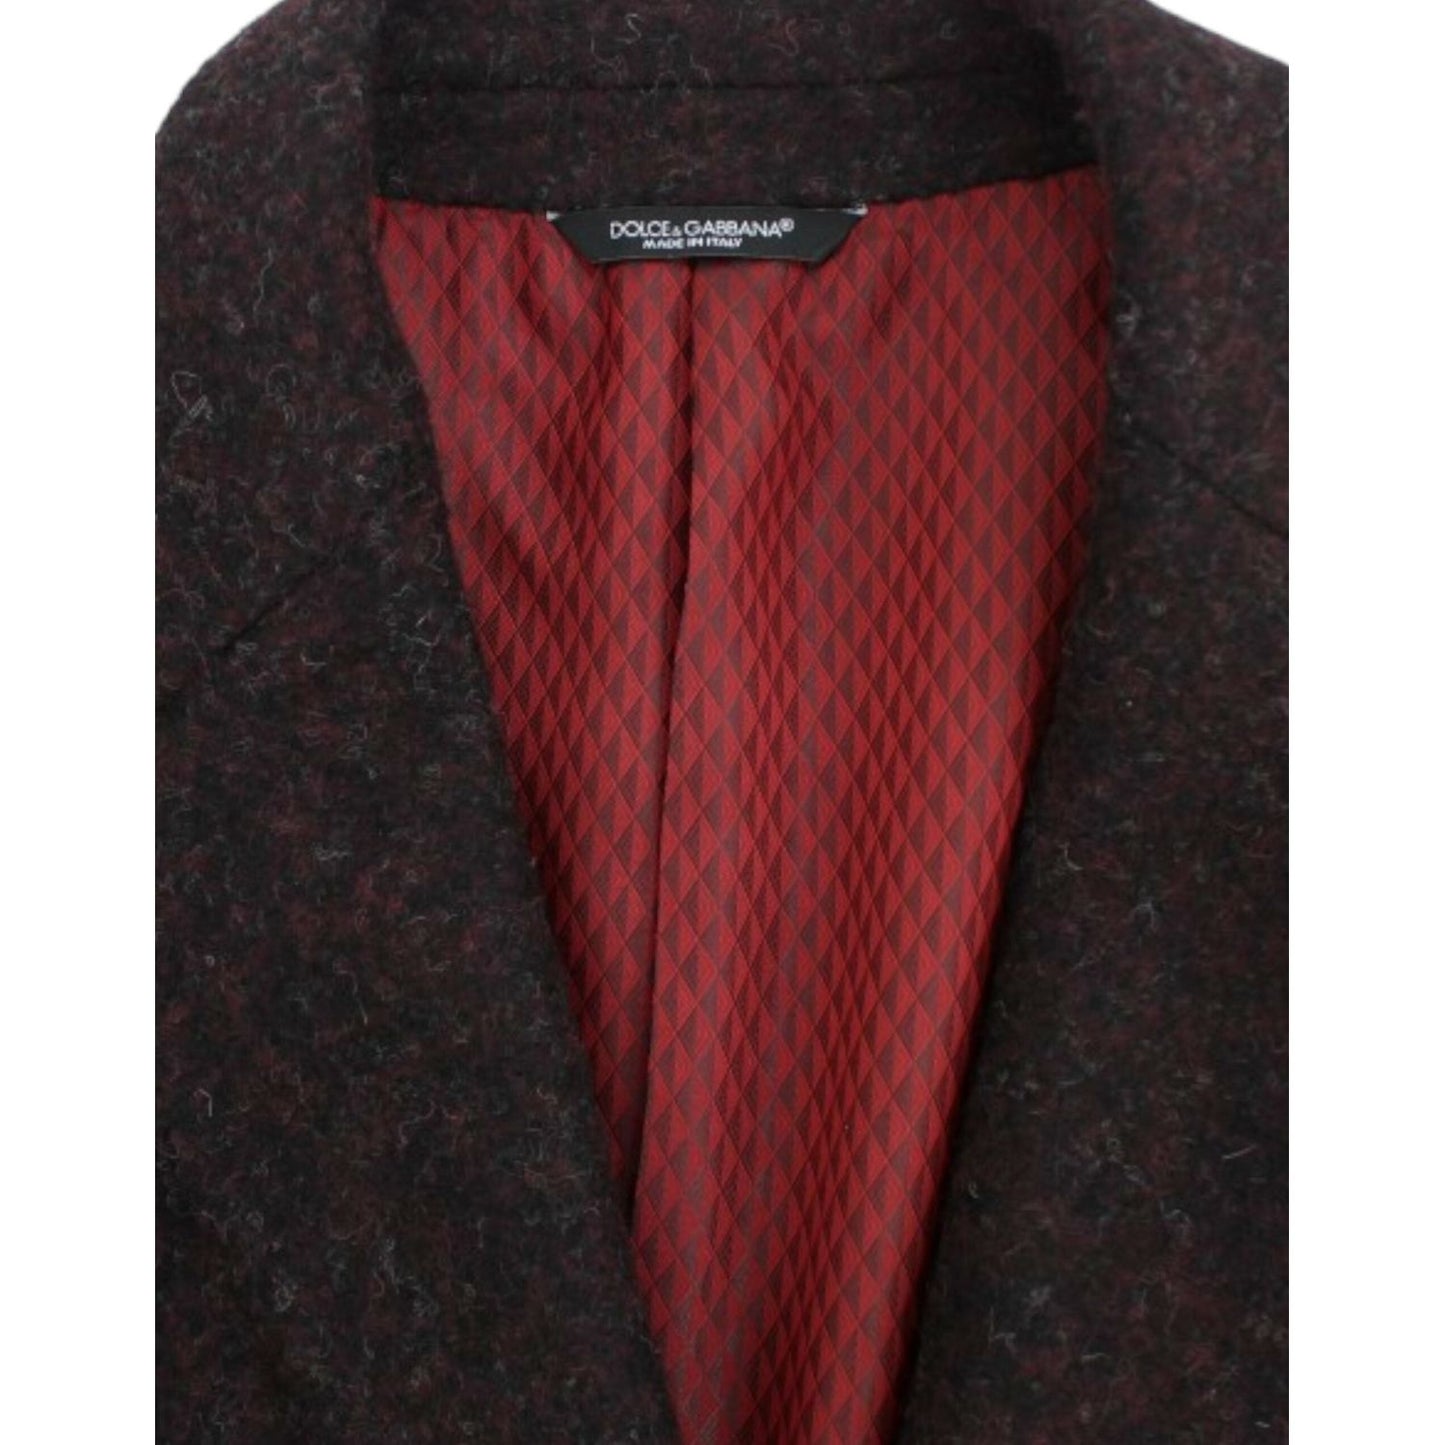 Dolce & Gabbana Bordeaux Alpaga Two-Button Blazer Jacket bordeaux-alpaga-two-button-blazer 12462-bordeaux-alpaga-two-button-blazer-7-scaled-132c2106-39e.jpg